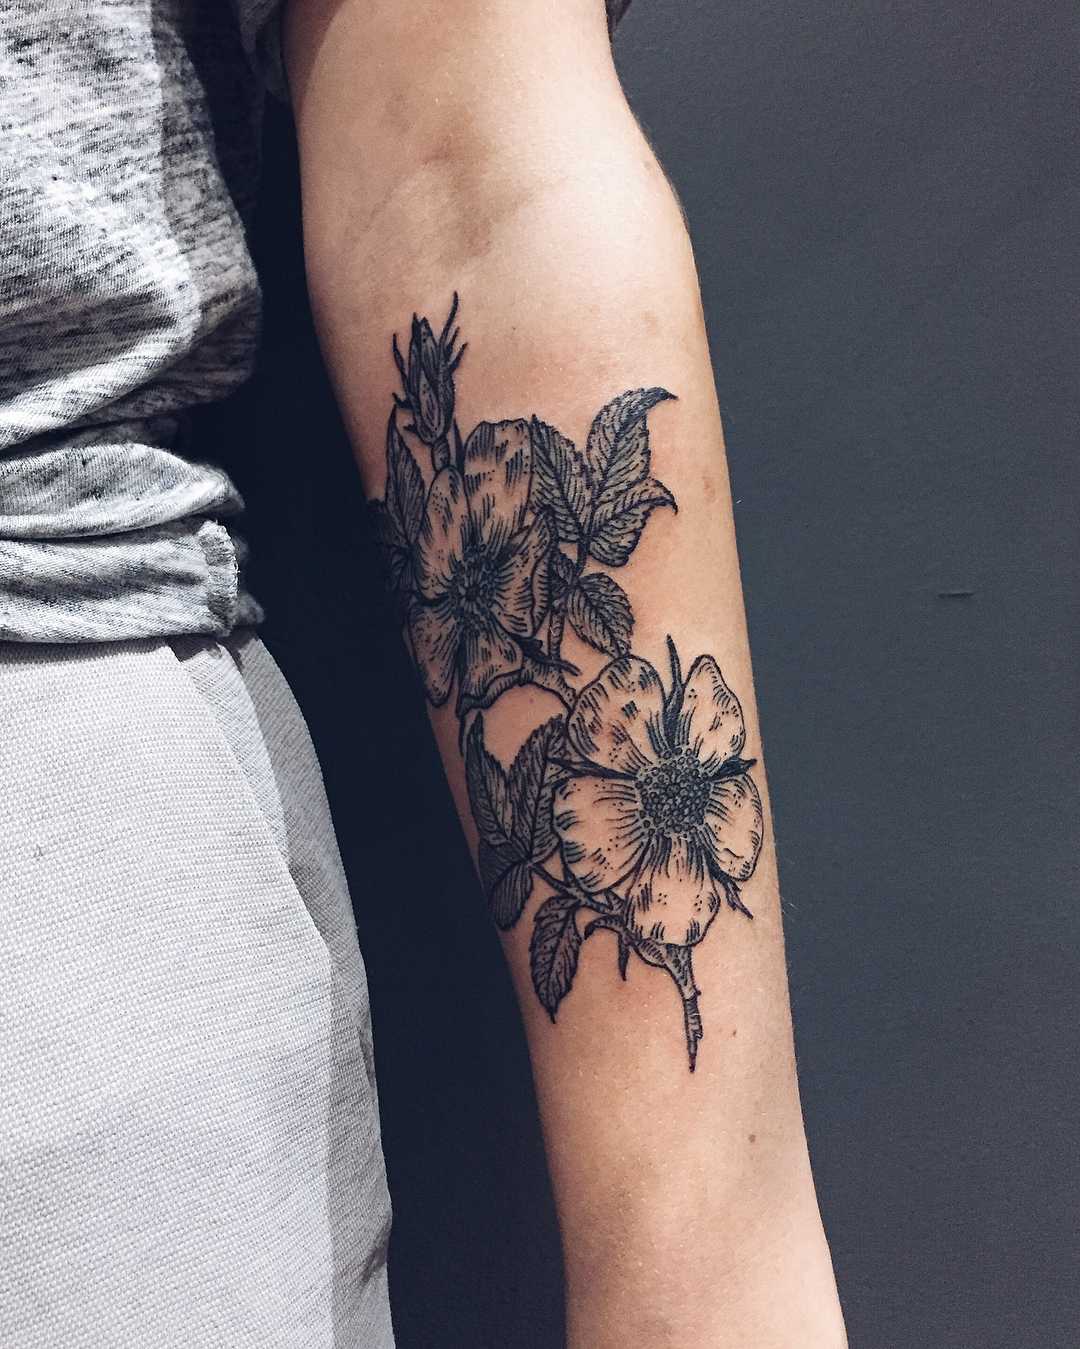 Wild roses tattoo by Finley Jordan